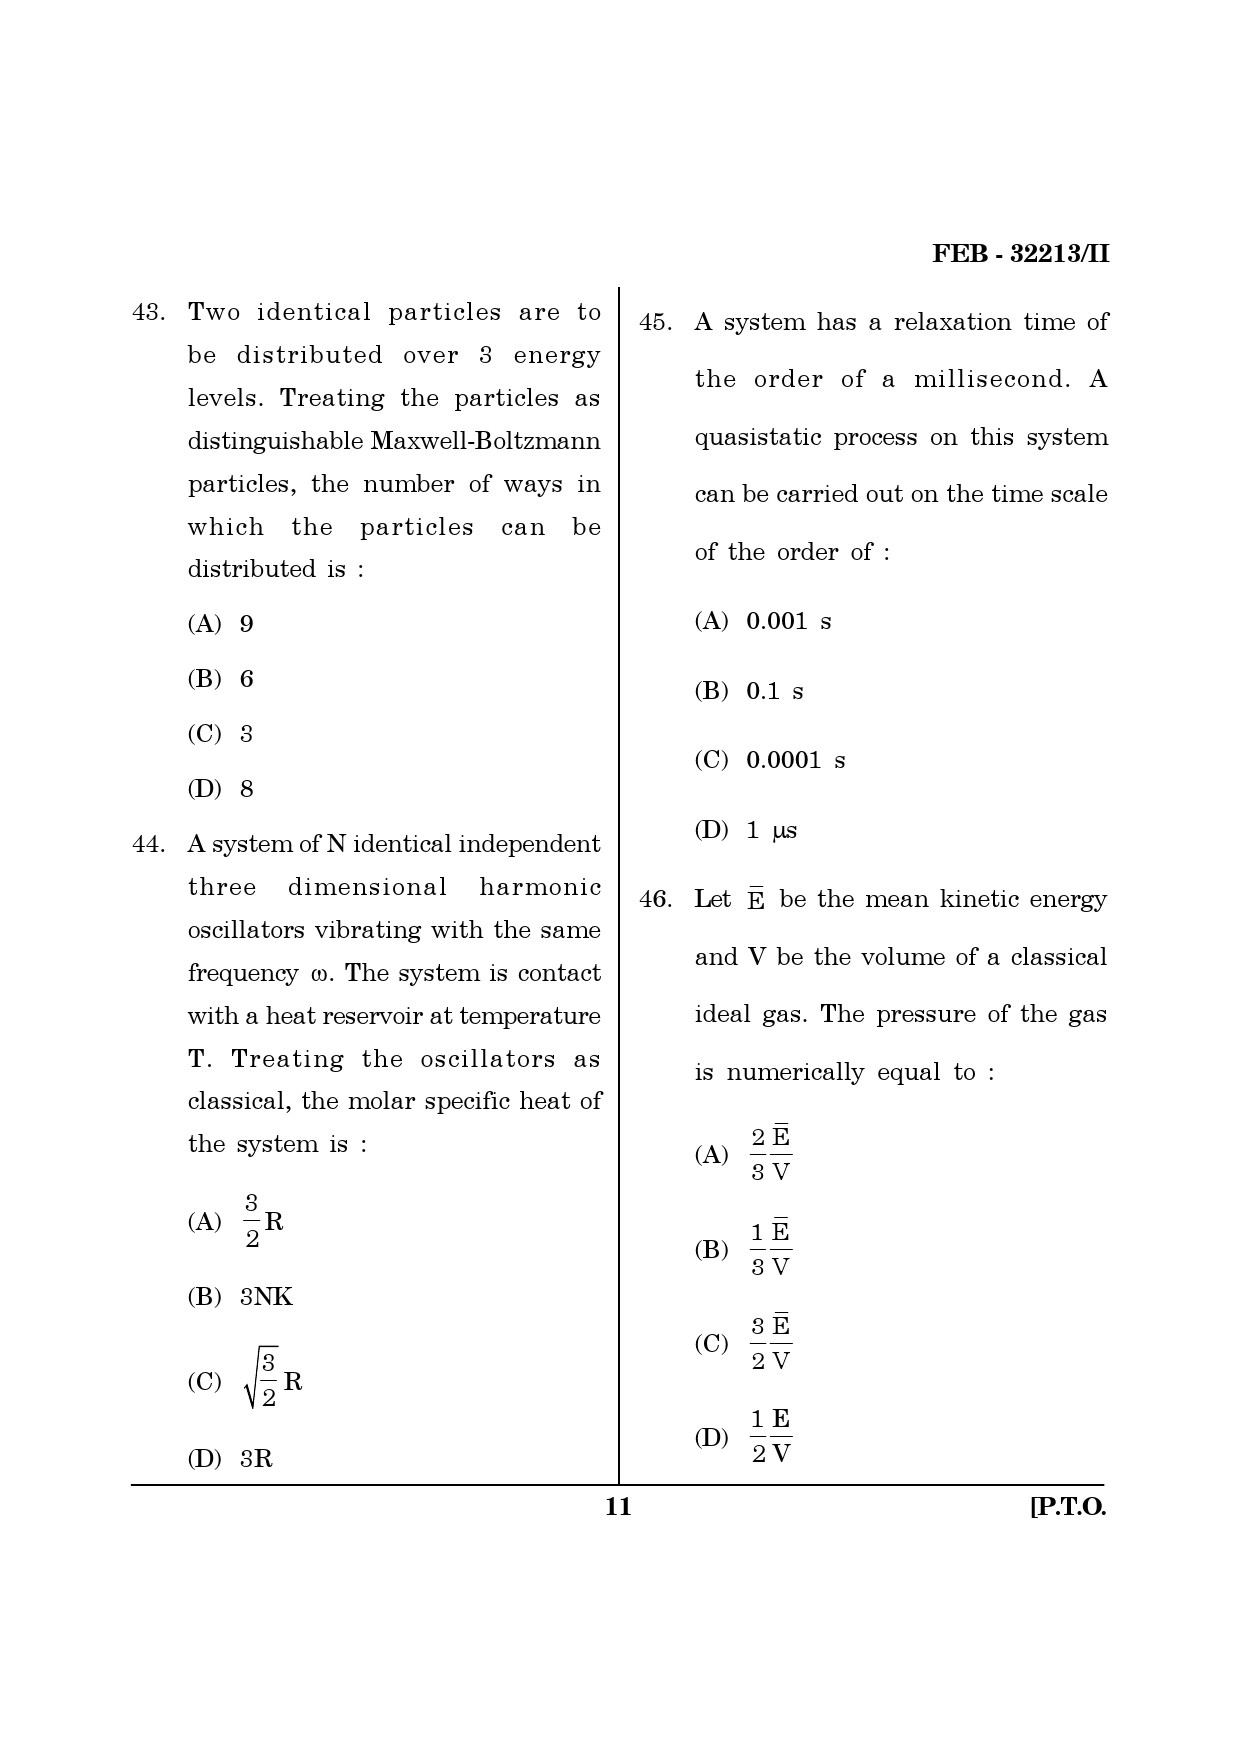 Maharashtra SET Physics Question Paper II February 2013 11